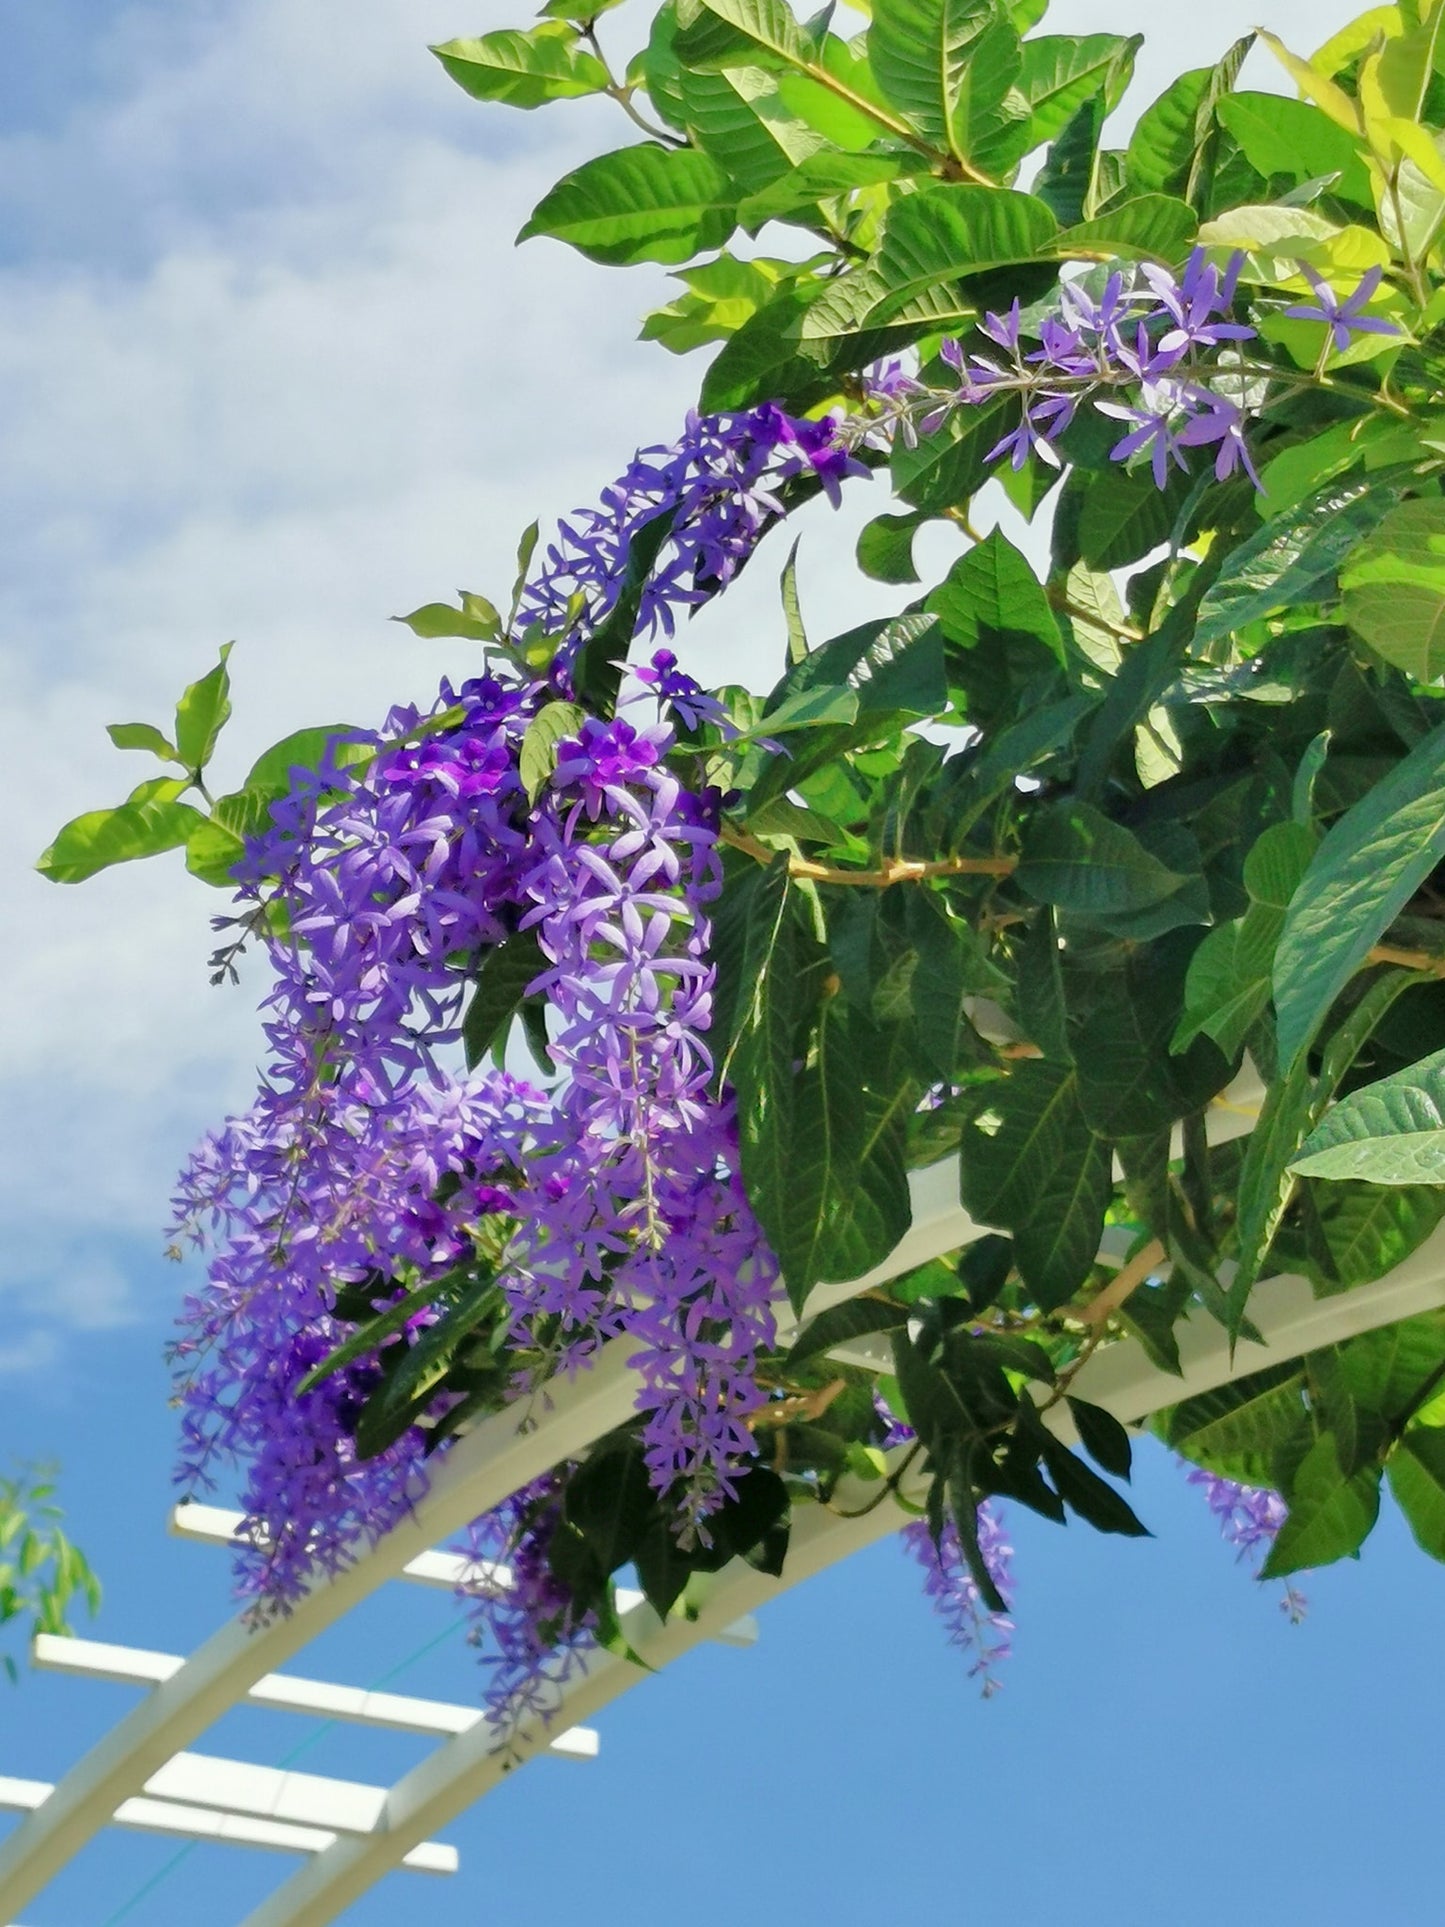 Queen's wreath, petrea, purple wreath, or sandpaper vine